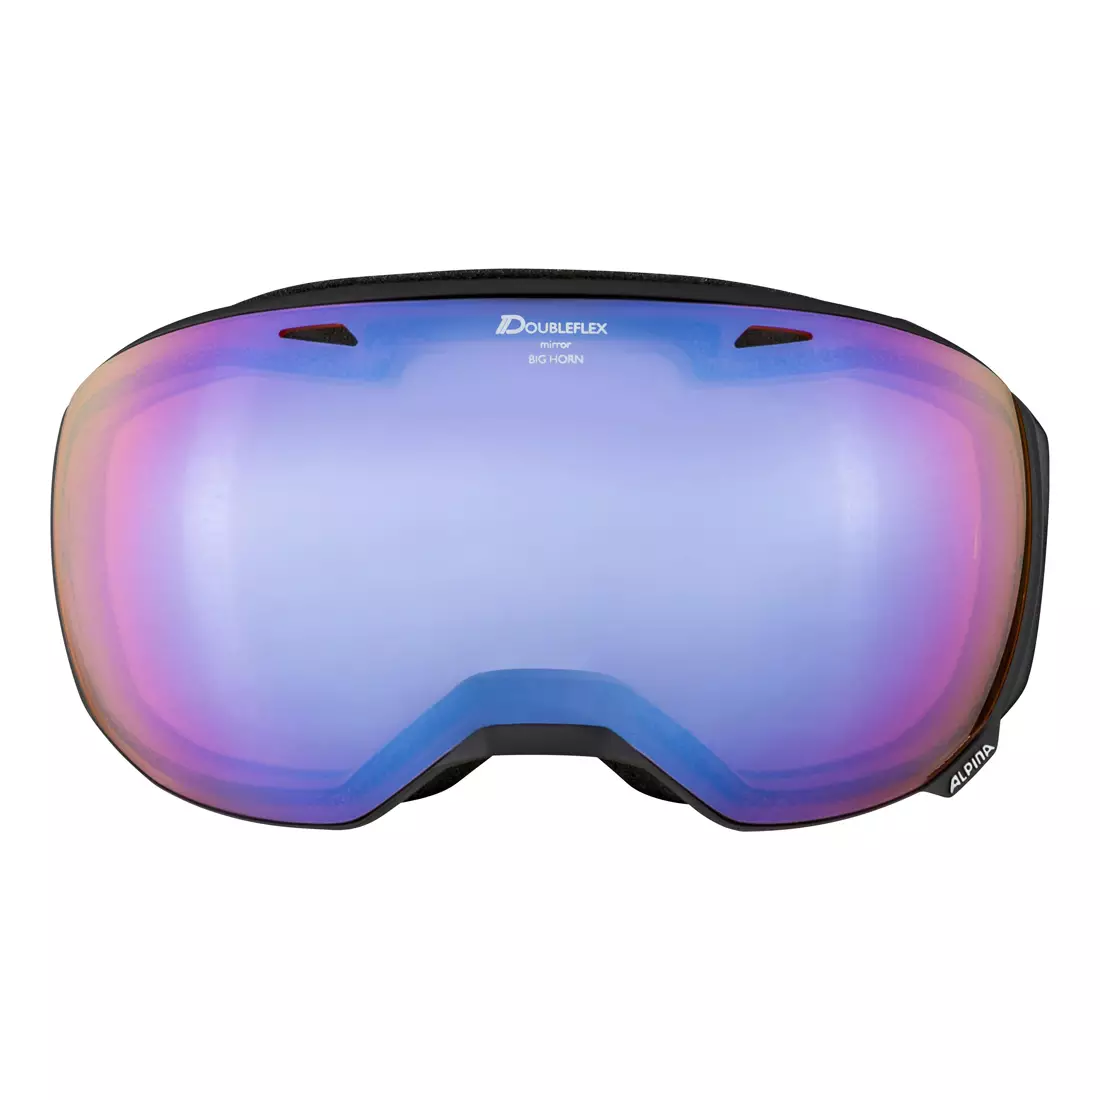 ALPINA BIG HORN Q-LITE sí/snowboard szemüveg, black matt